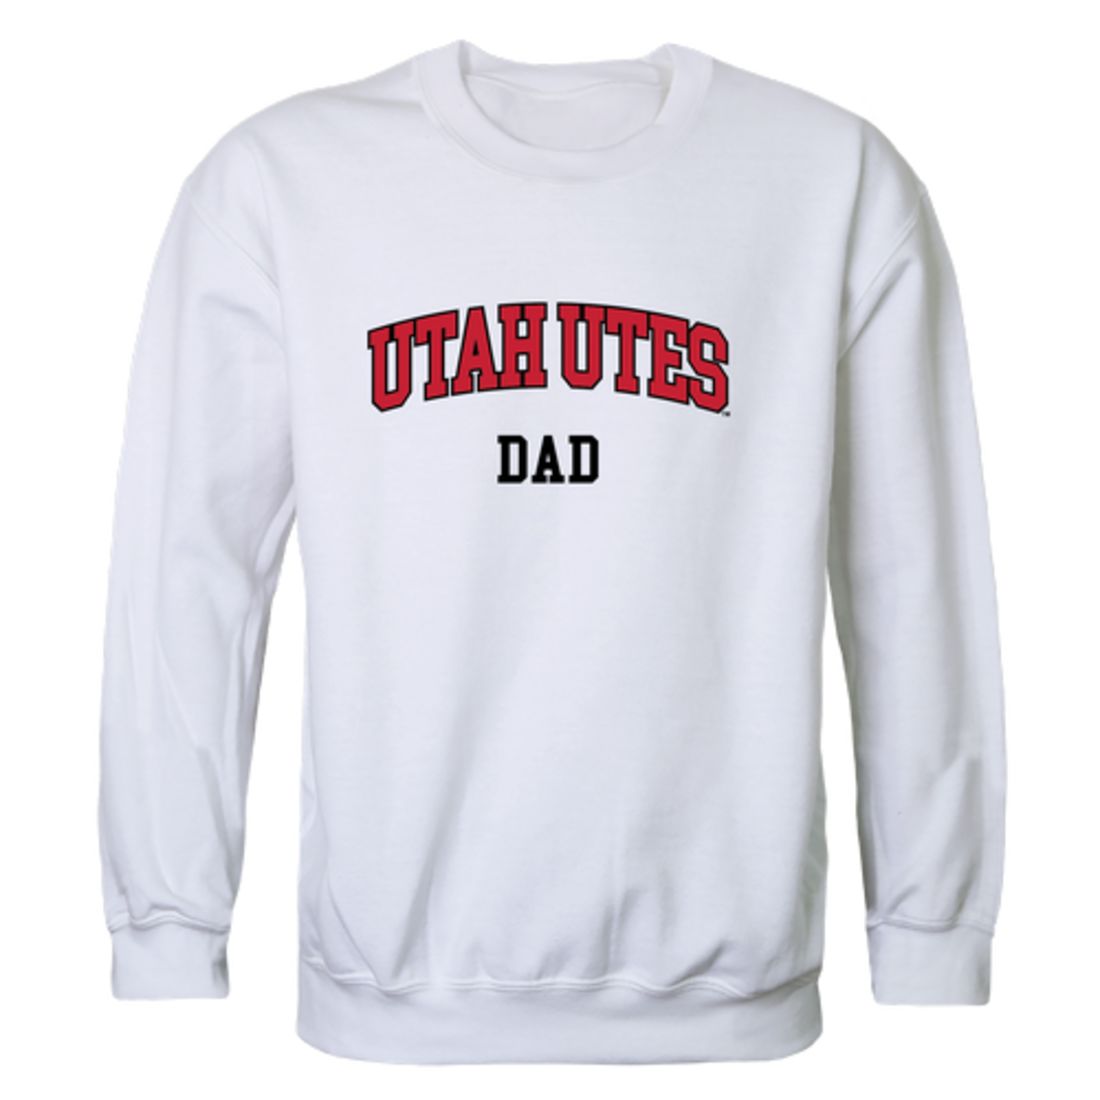 University of Utah Utes Dad Fleece Crewneck Pullover Sweatshirt